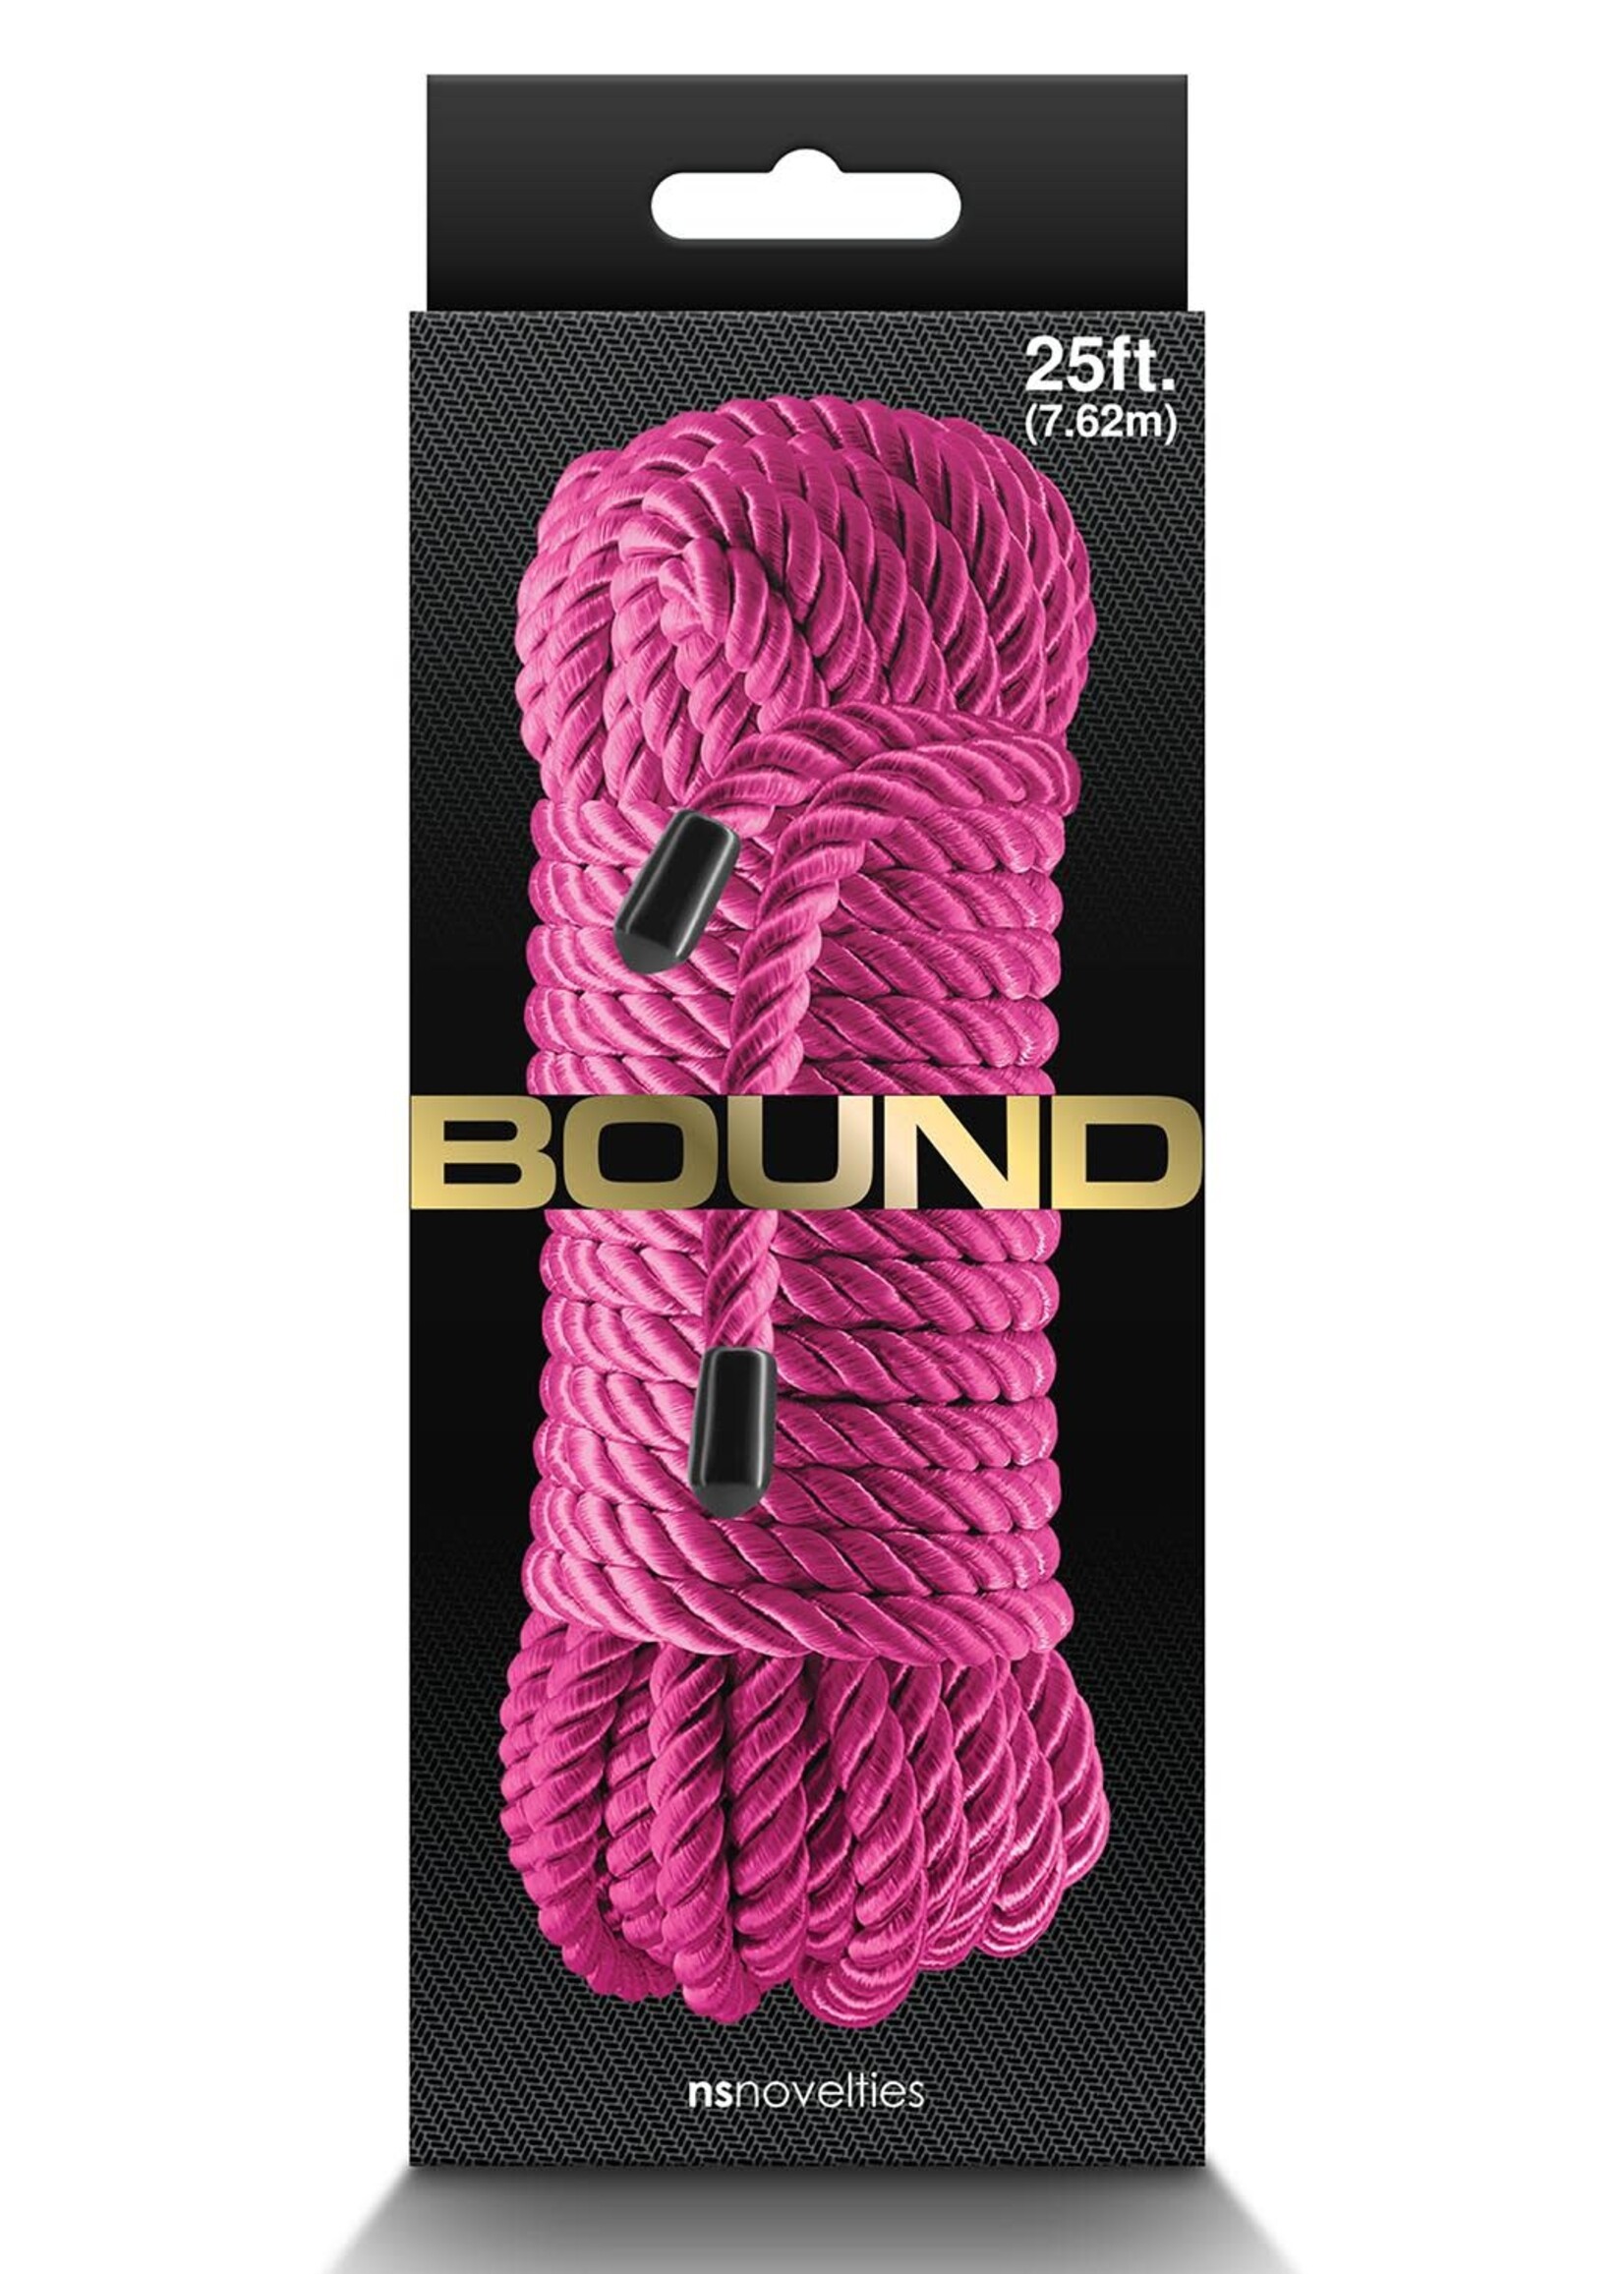 NS Novelties Bound rope pink - 7.62m